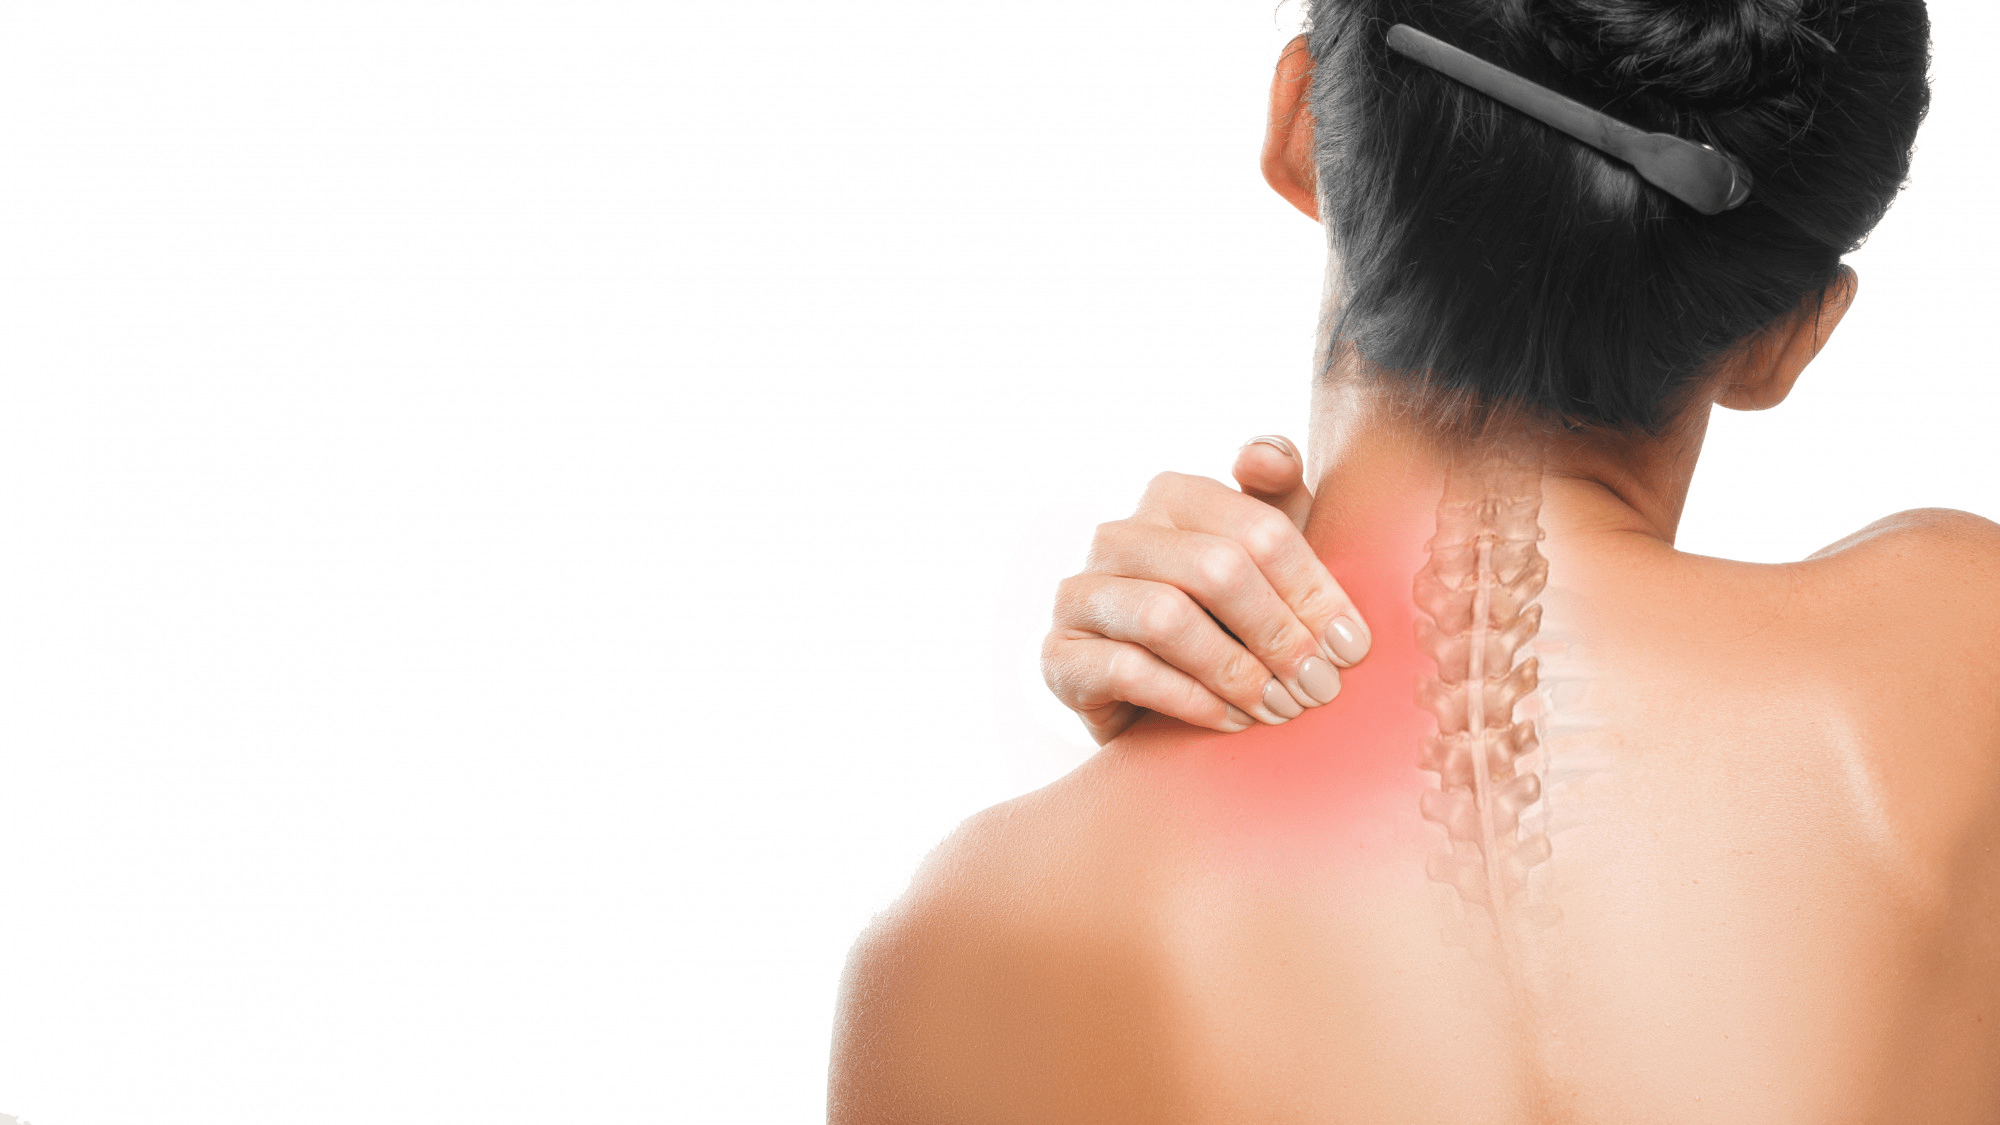 Non-Surgical Back Pain Treatments: